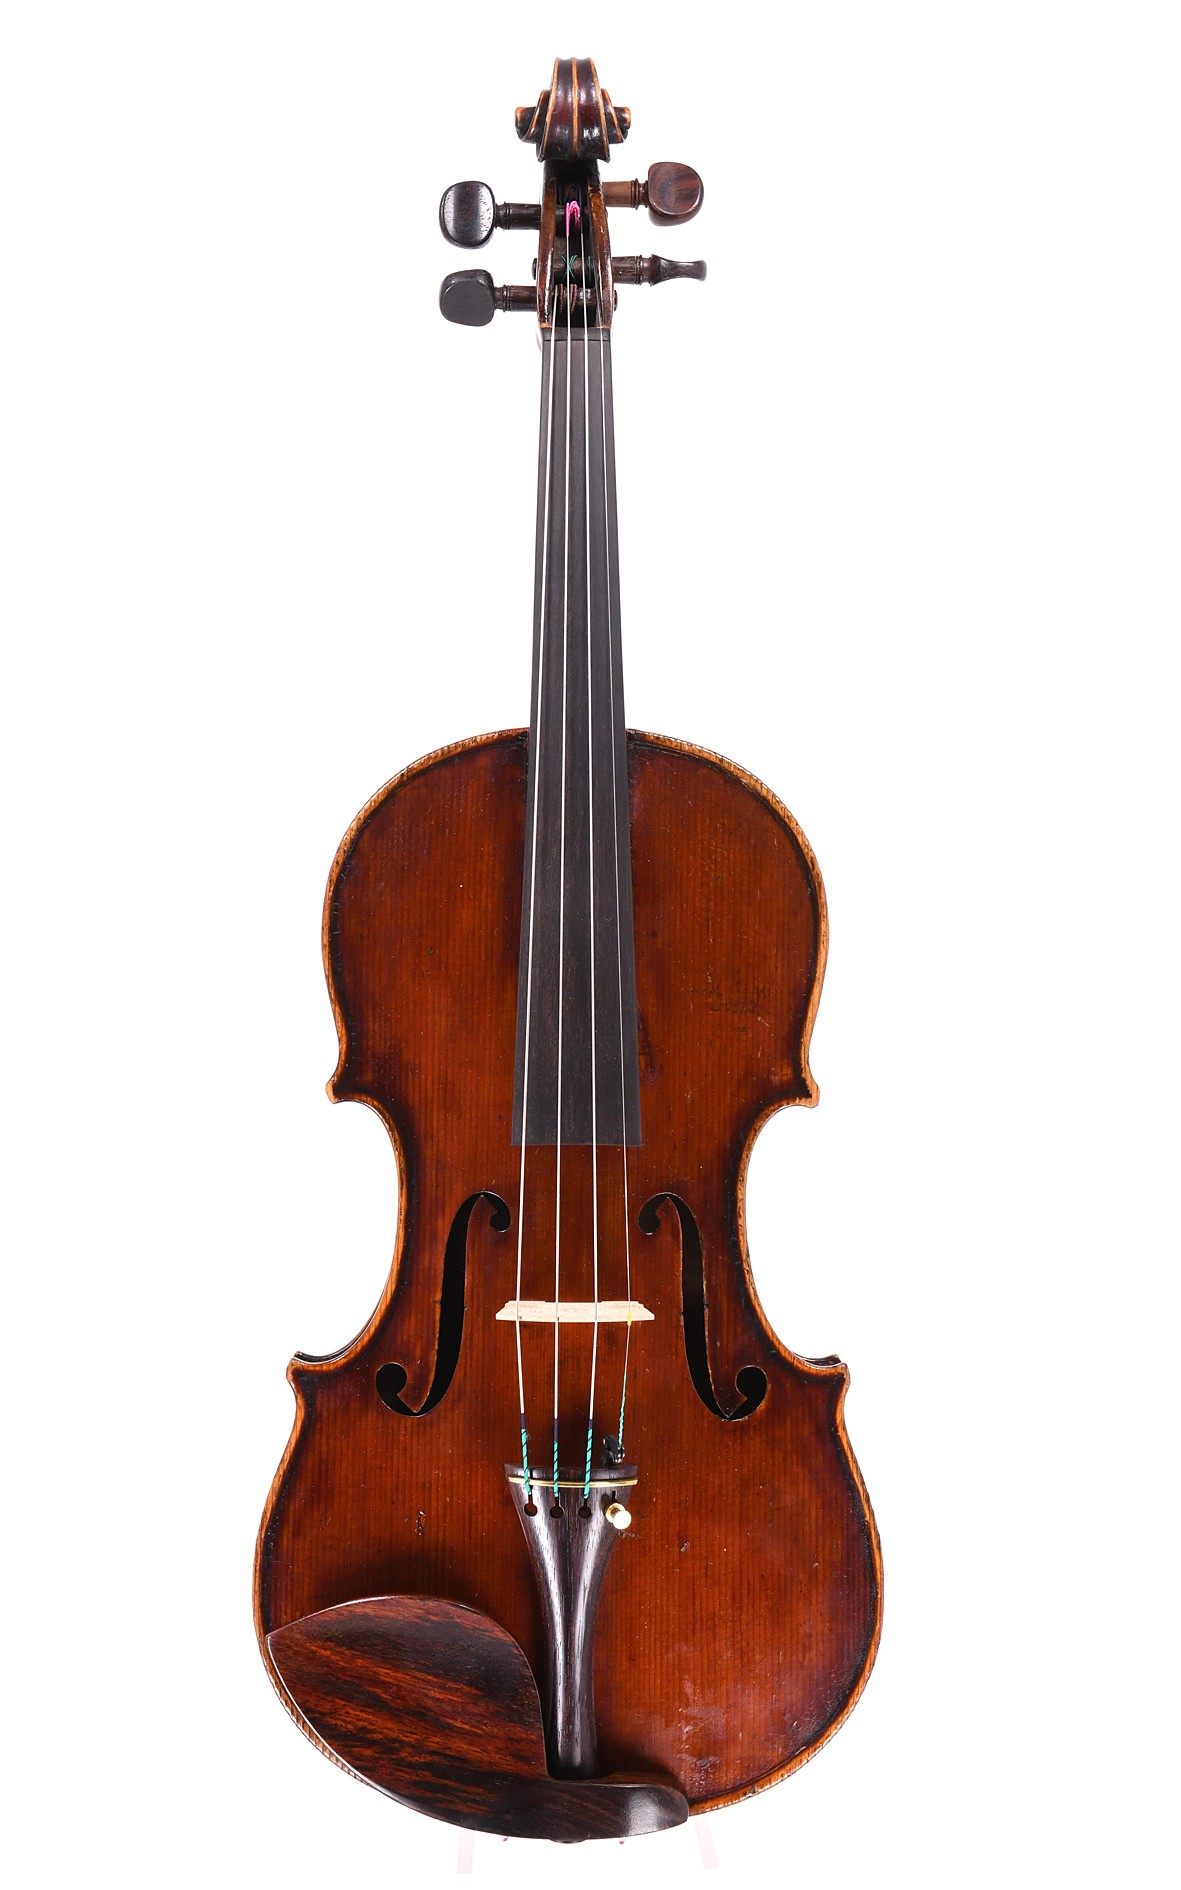 George Chanot jun., London - Violine